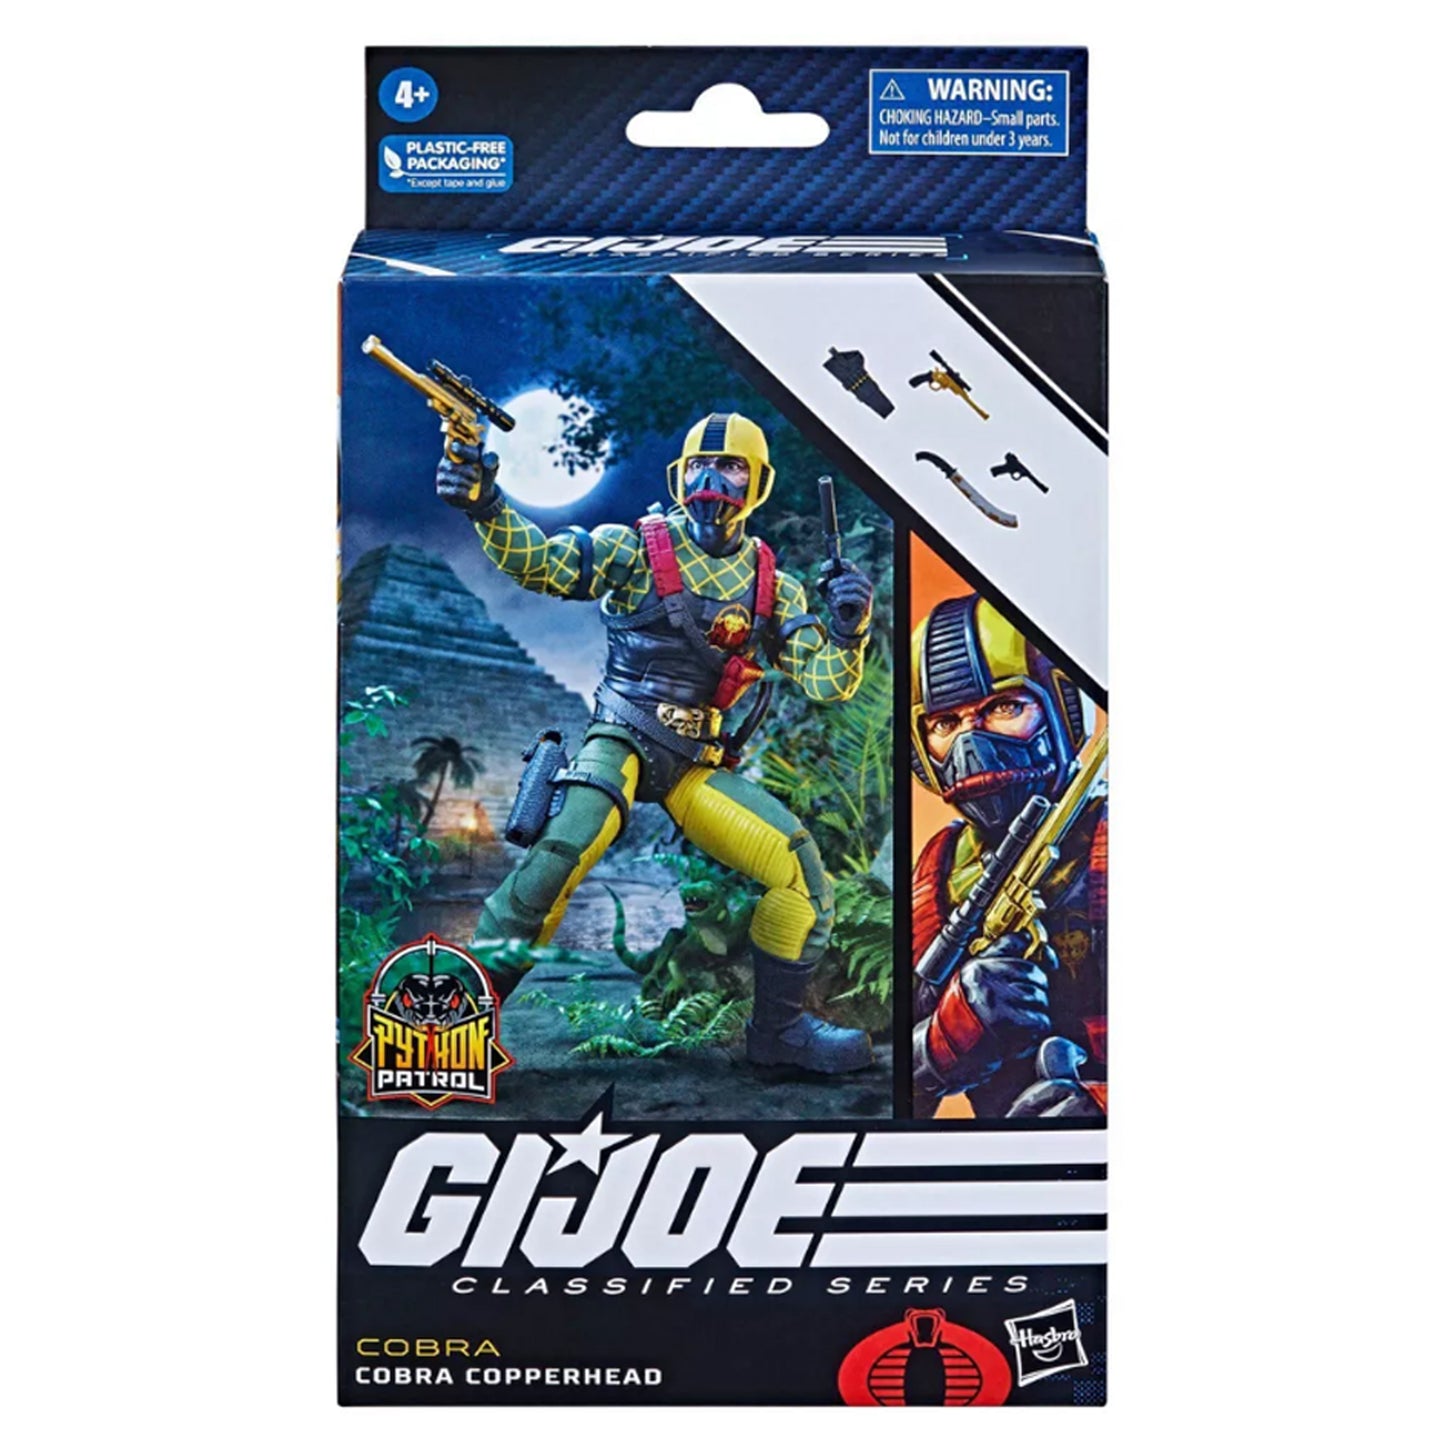 G.I. Joe Classified Series Python Patrol Cobra Cooperhead EXCLUSIVA